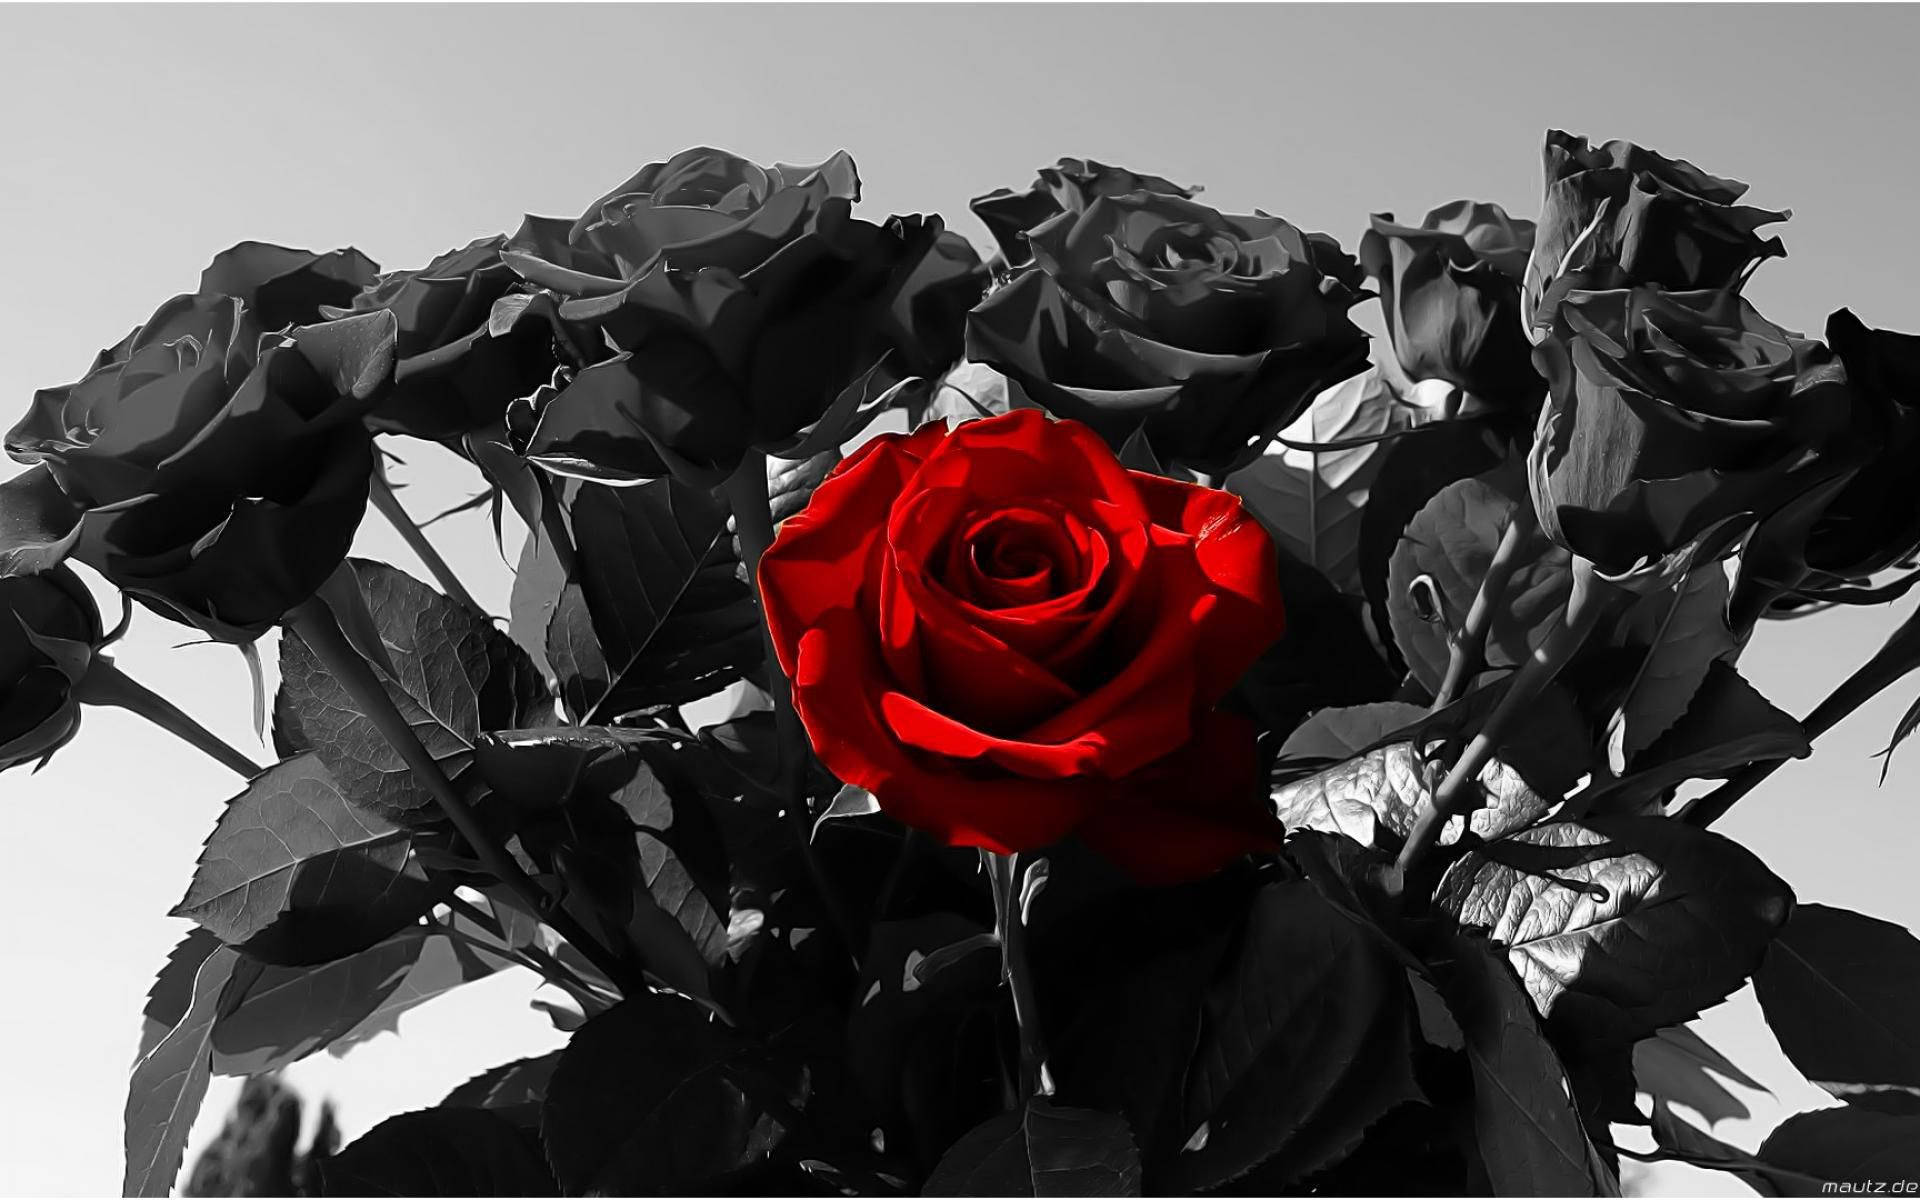 Free Black Rose Wallpaper Downloads, Black Rose Wallpaper for FREE